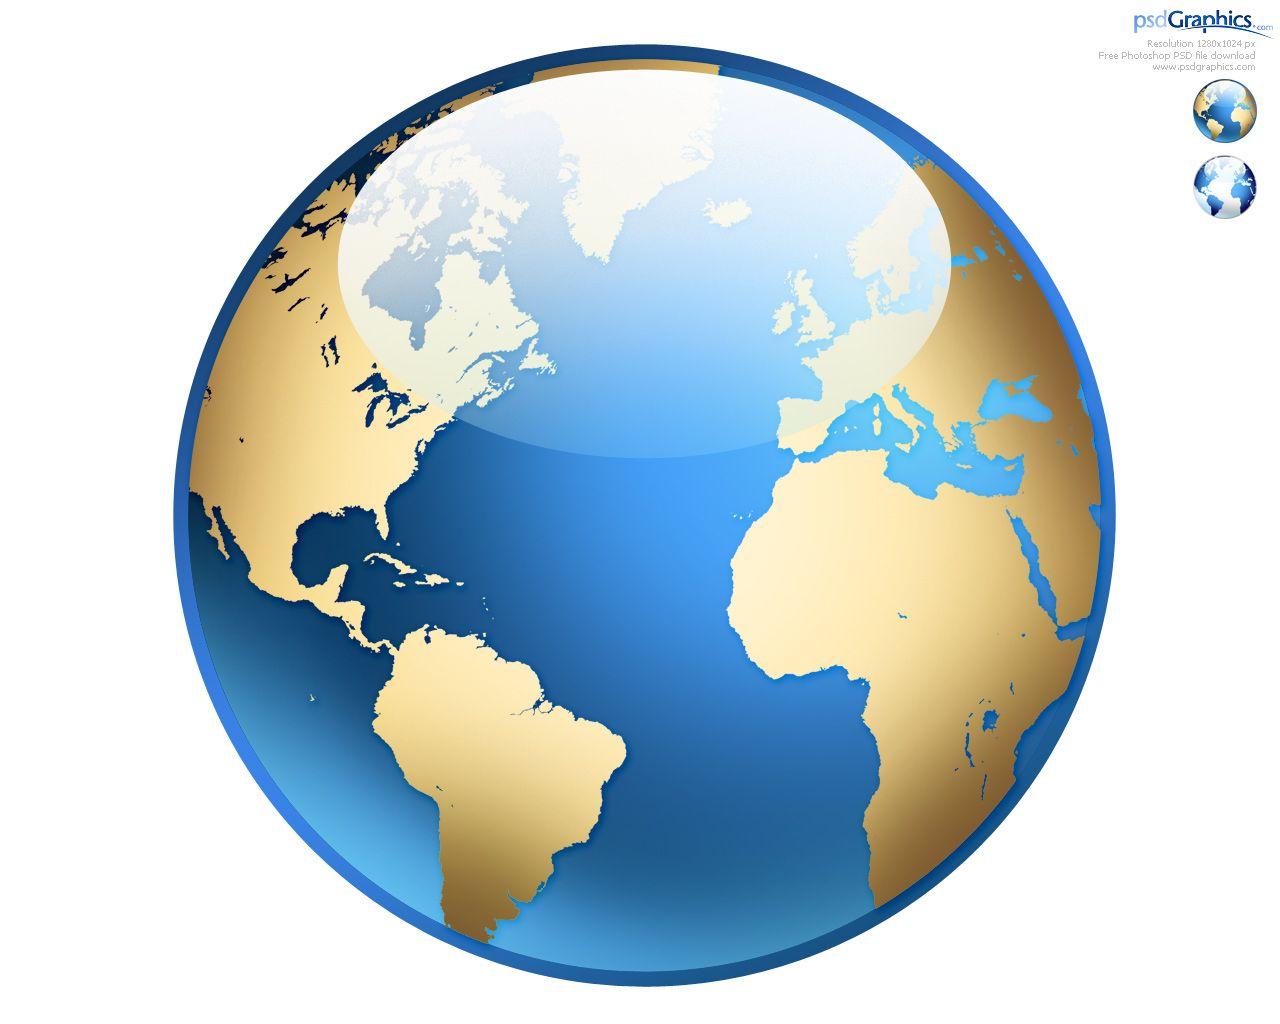 World Globe Logo - Free World Globe, Download Free